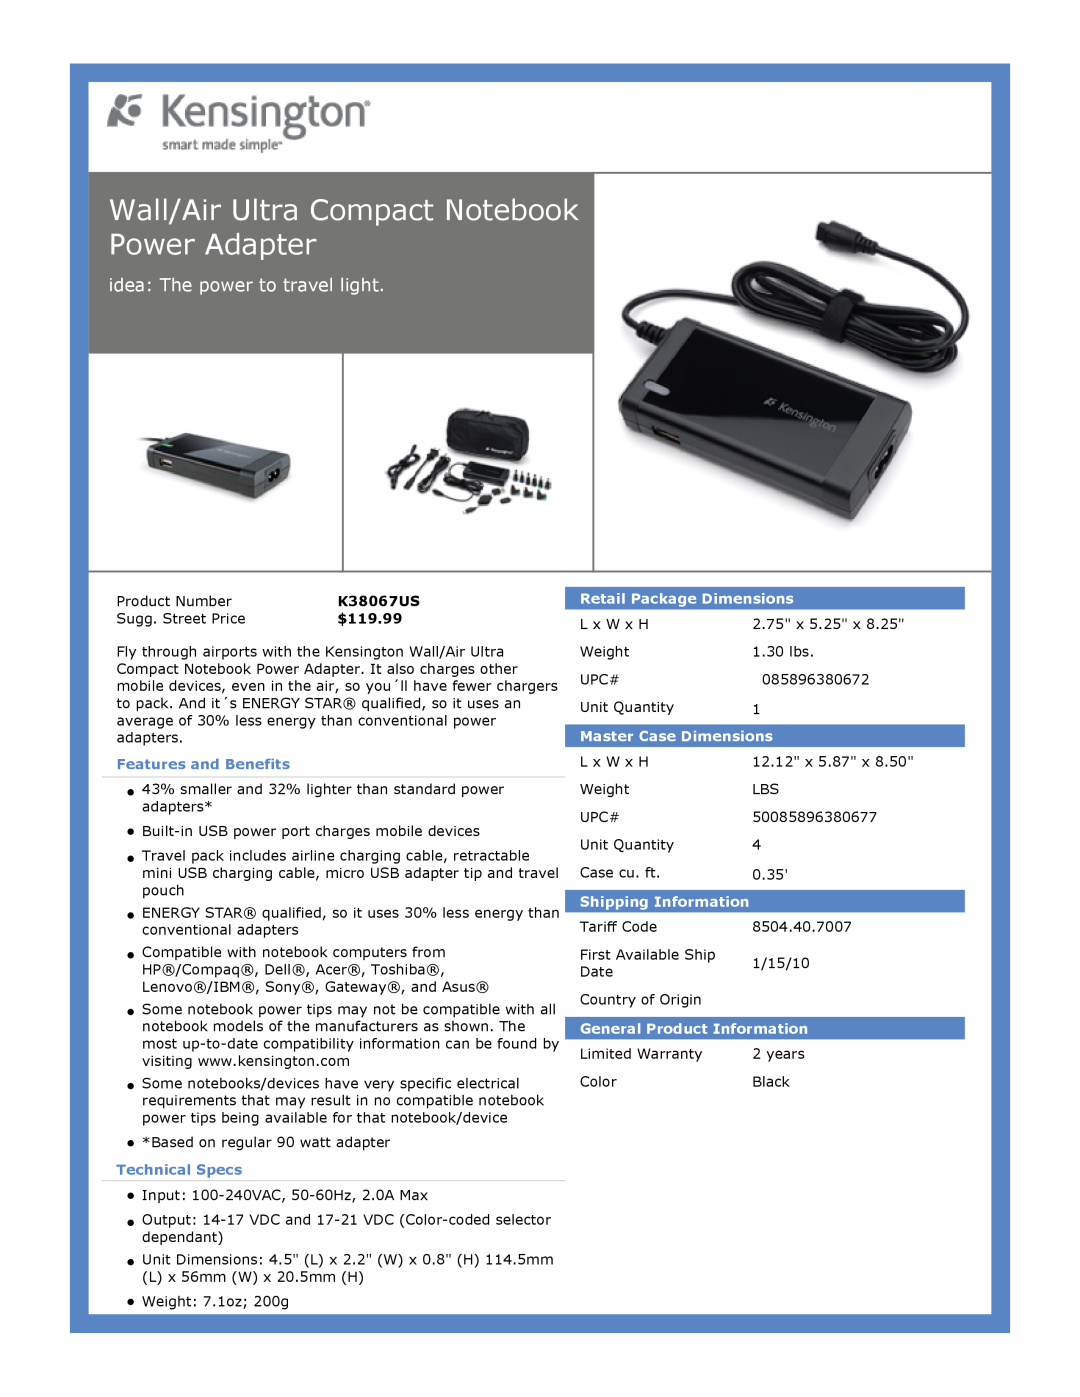 Kensington EU64325 dimensions Wall/Air Ultra Compact Notebook Power Adapter, idea: The power to travel light, $119.99 